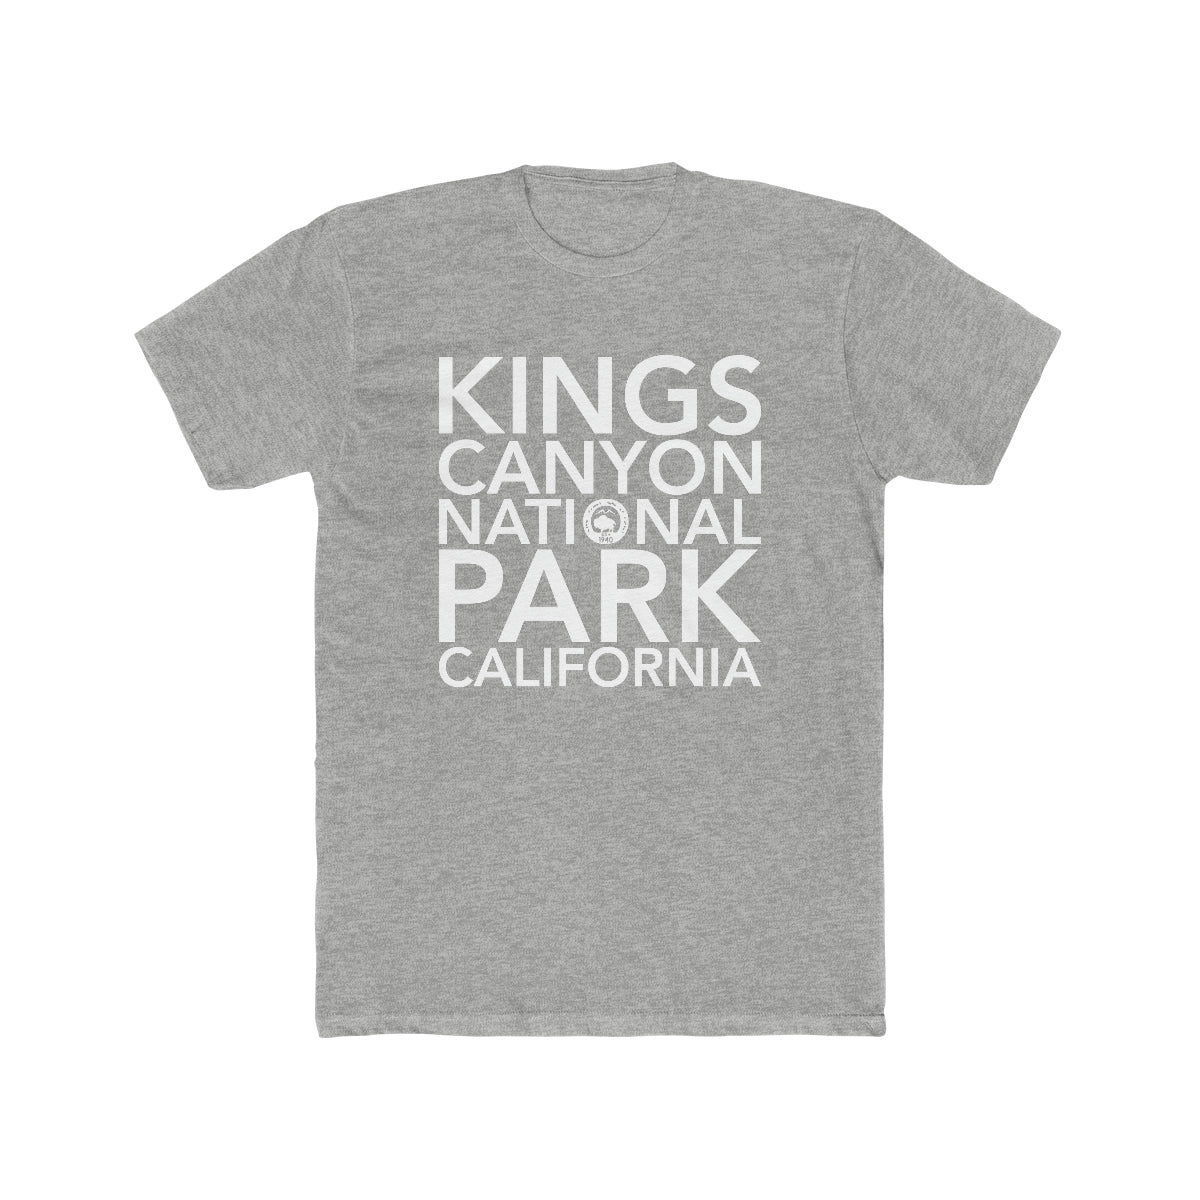 Kings Canyon National Park T-Shirt Block Text